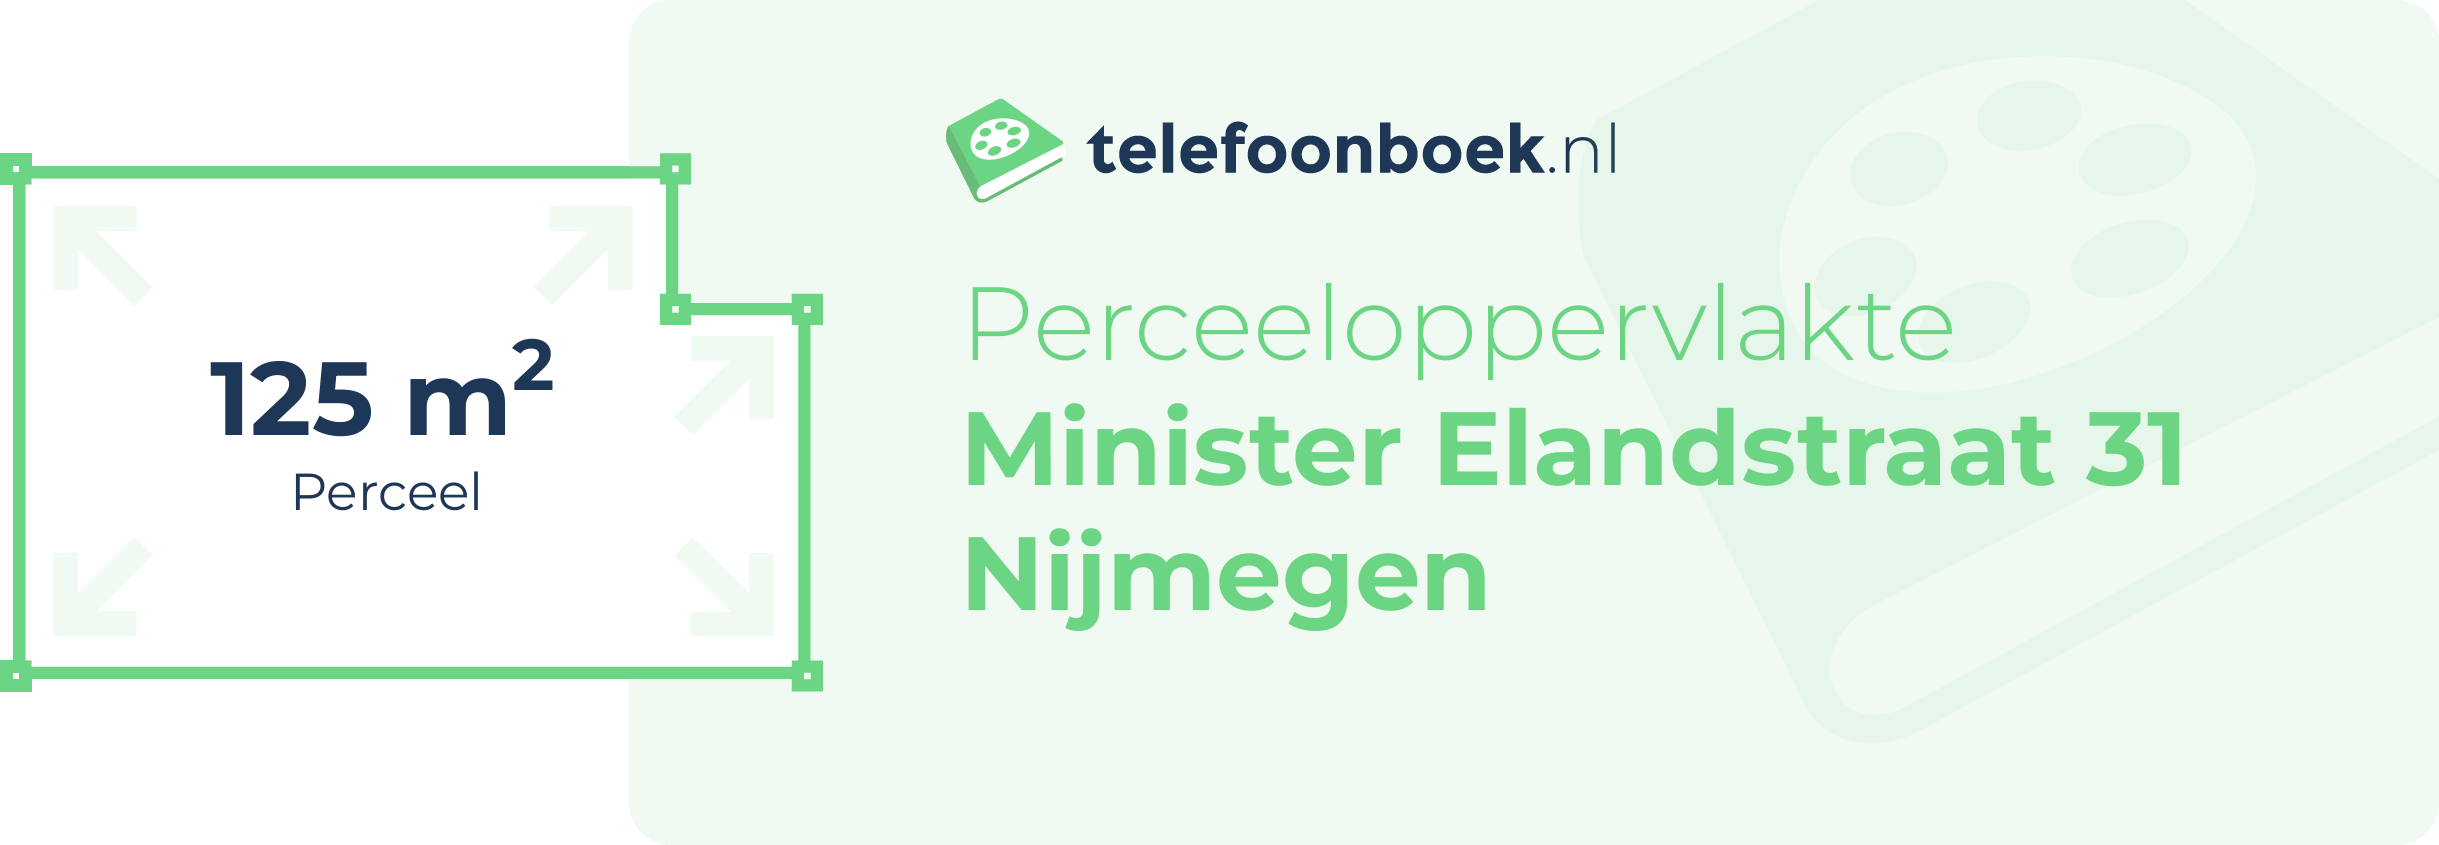 Perceeloppervlakte Minister Elandstraat 31 Nijmegen